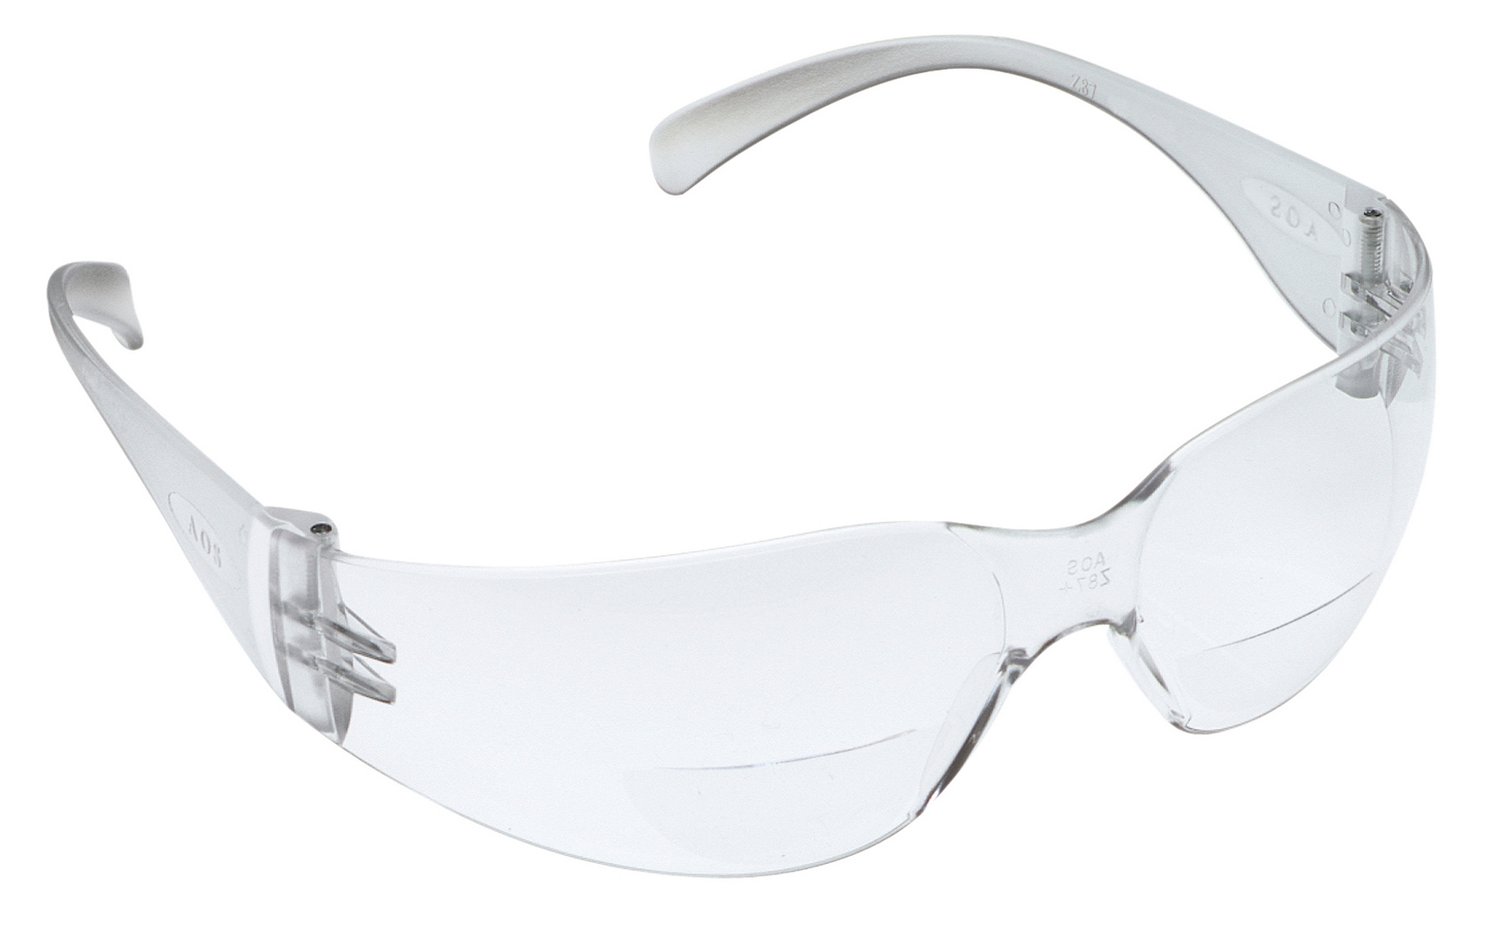 7000127512 - 3M Virtua Reader Protective Eyewear 11514-00000-20 Clear Anti-Fog
Lens, Clear Temple, +2.0 Diopter 20 EA/Case